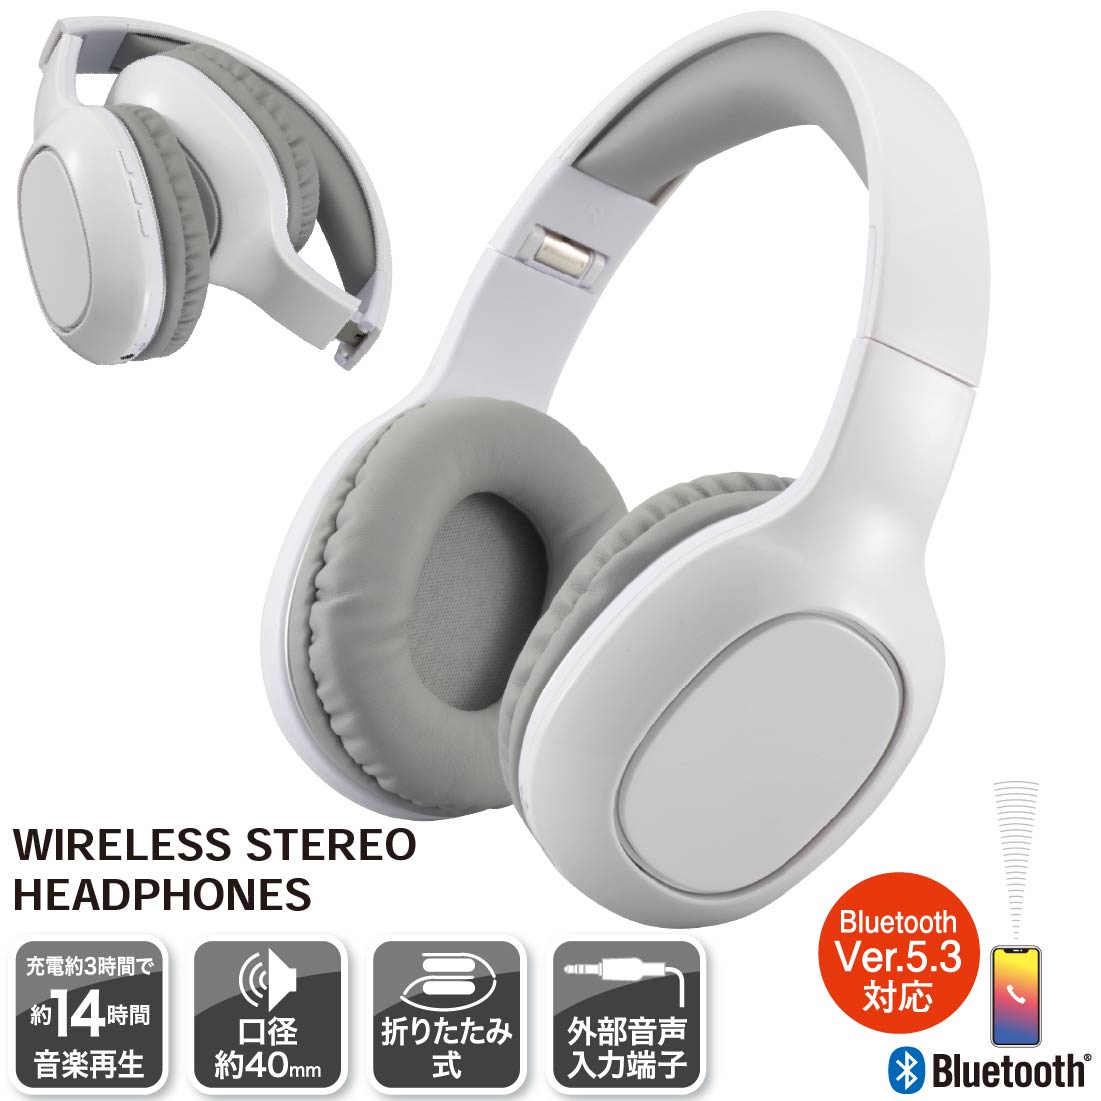 OHM AudioComm Bluetoothステレオヘッドホン HP-W265Z-W ホワイト AudioComm ヘッドホン本体の商品画像